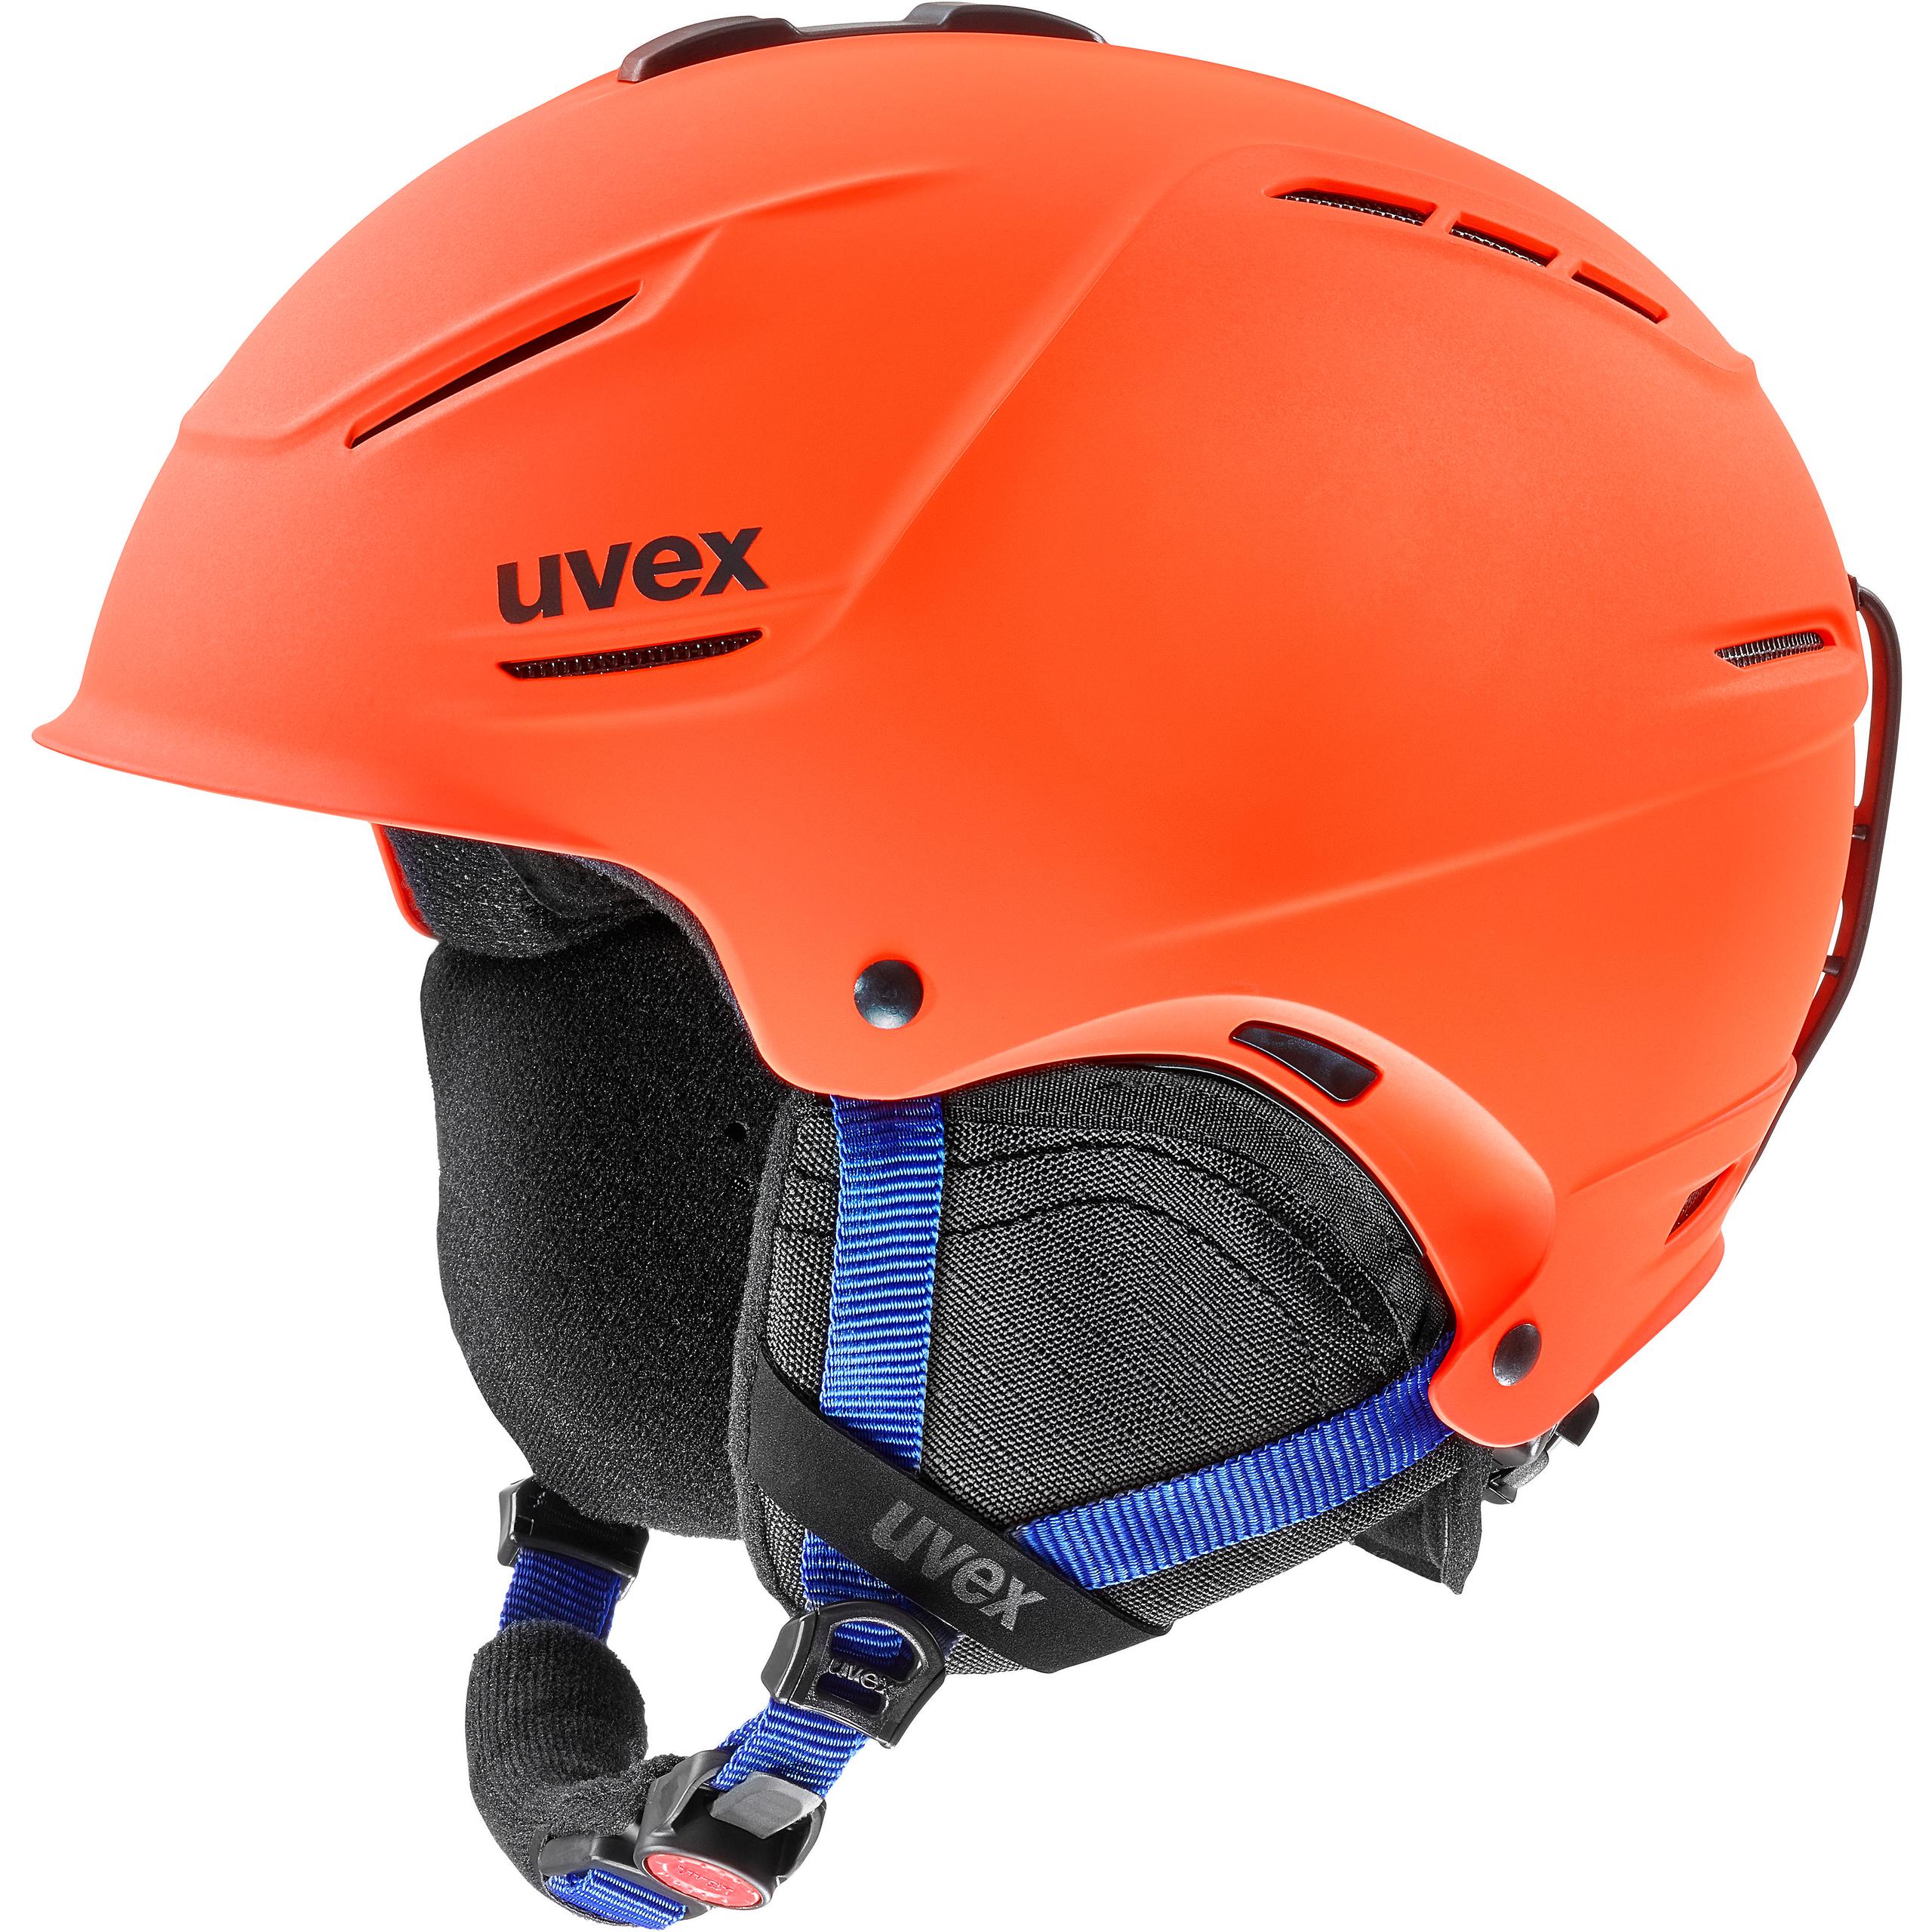 Snowboard Helmet Strato Metallic Mat 2020 Uvex hlmt P1Us 2.0 Ski 